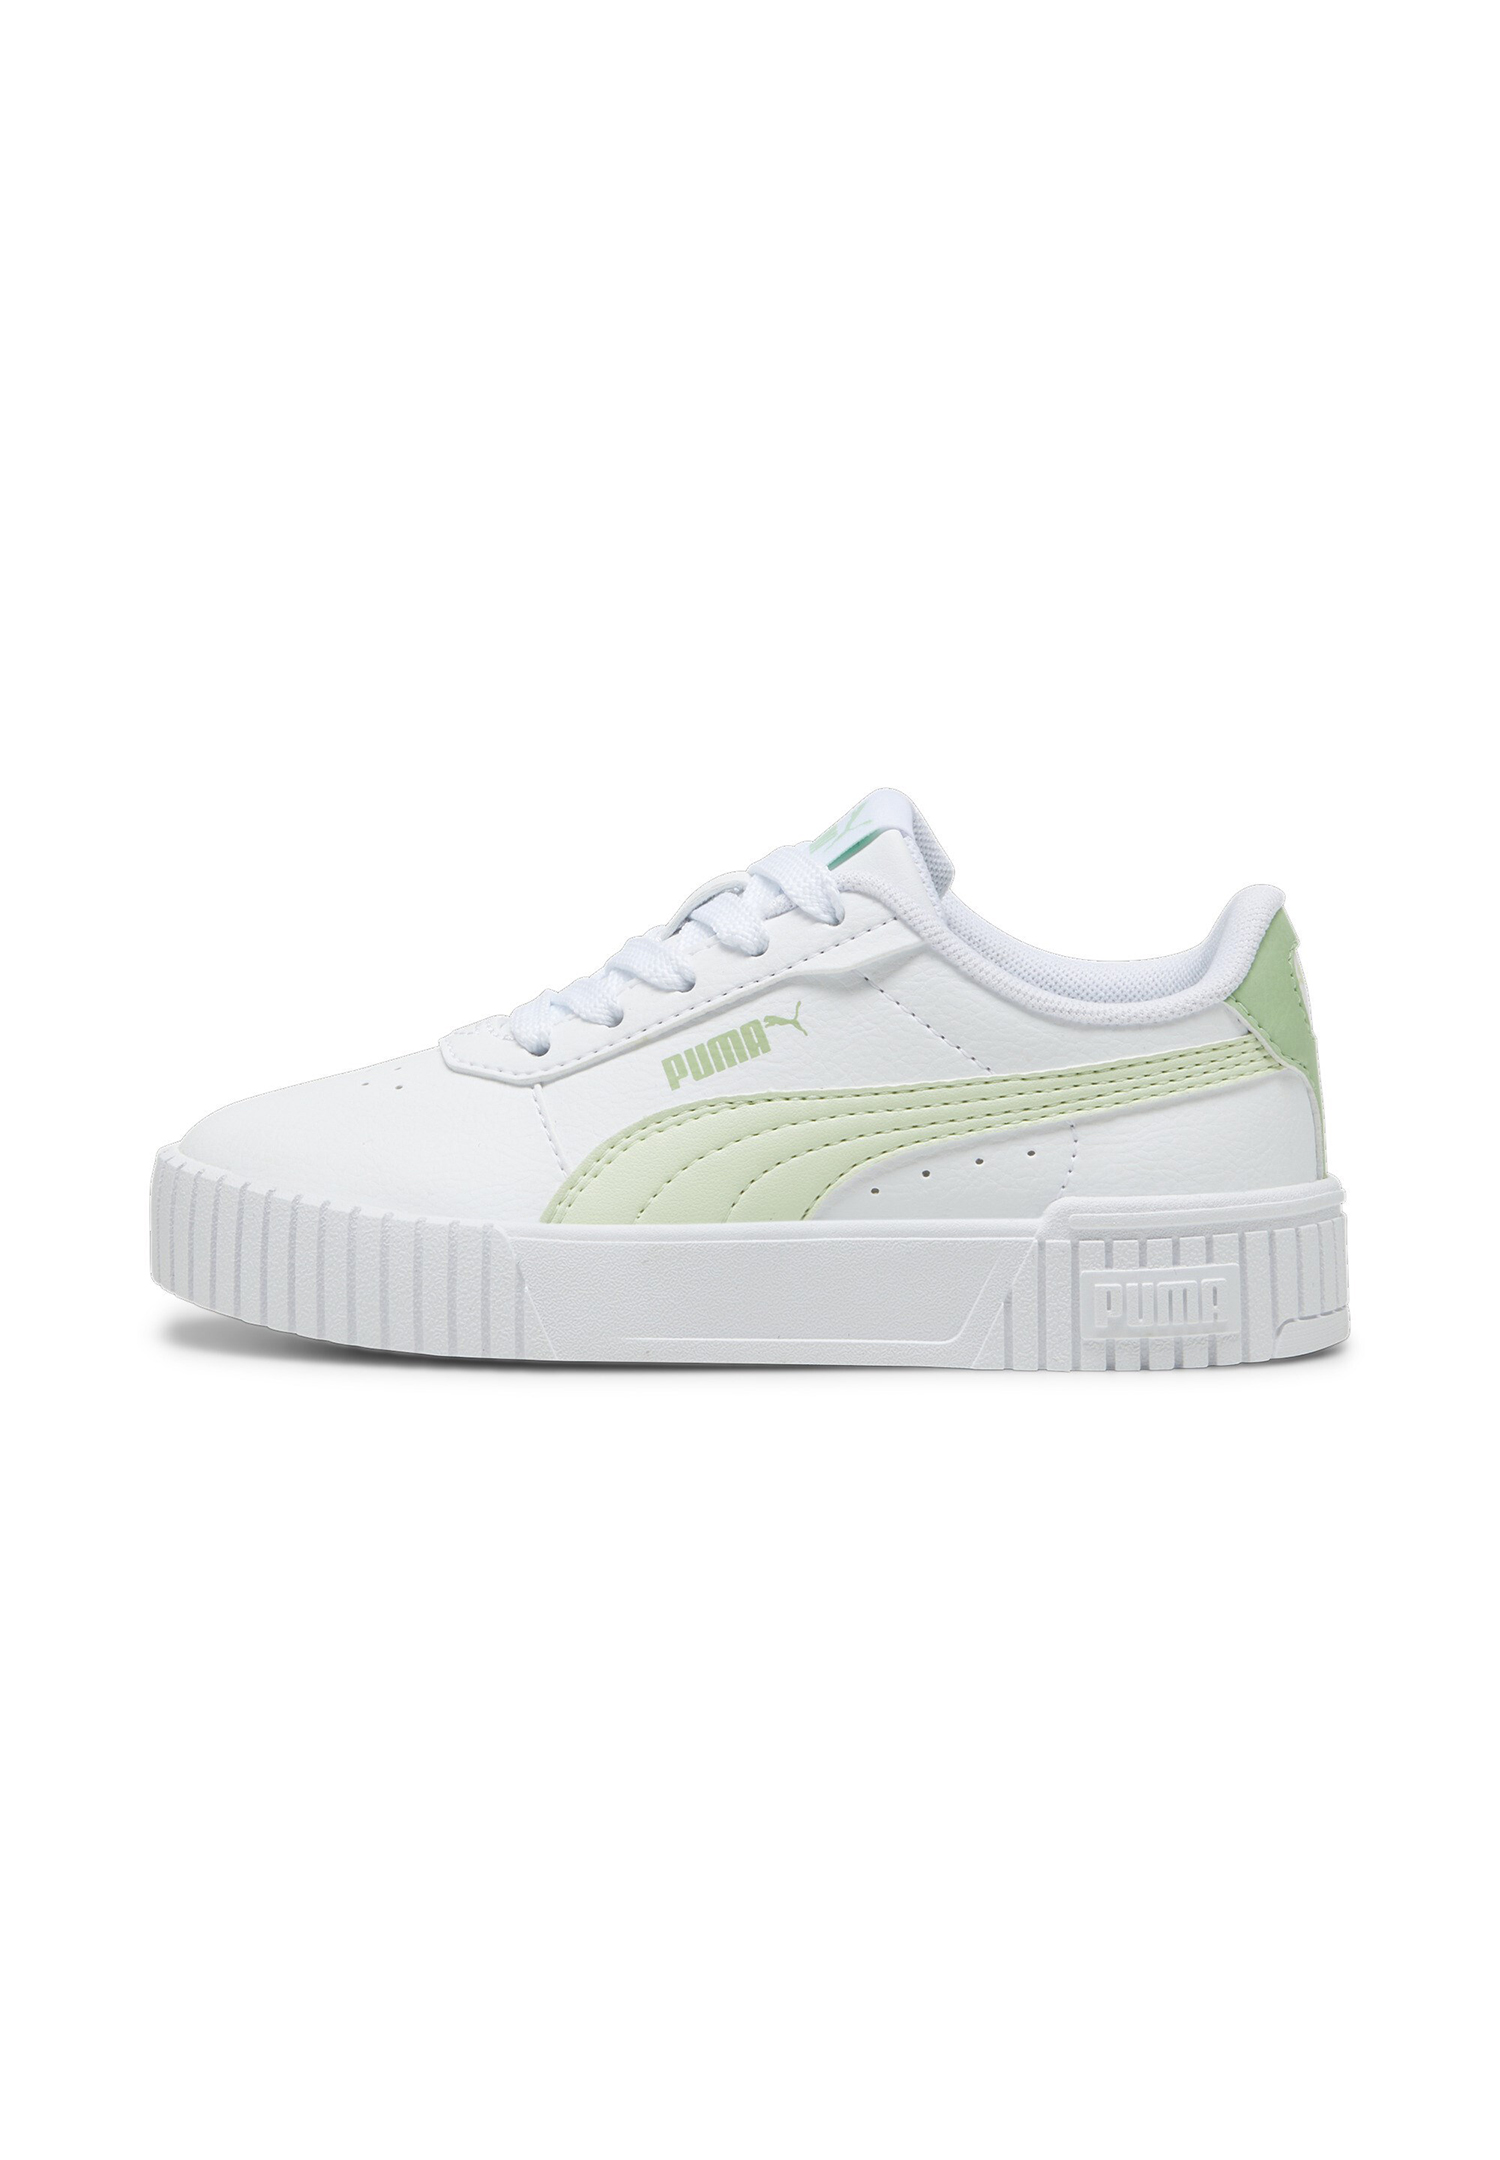 Puma Carina 2.0 PS Kinder Sneaker Schuhe 386186 15 weiß/grün